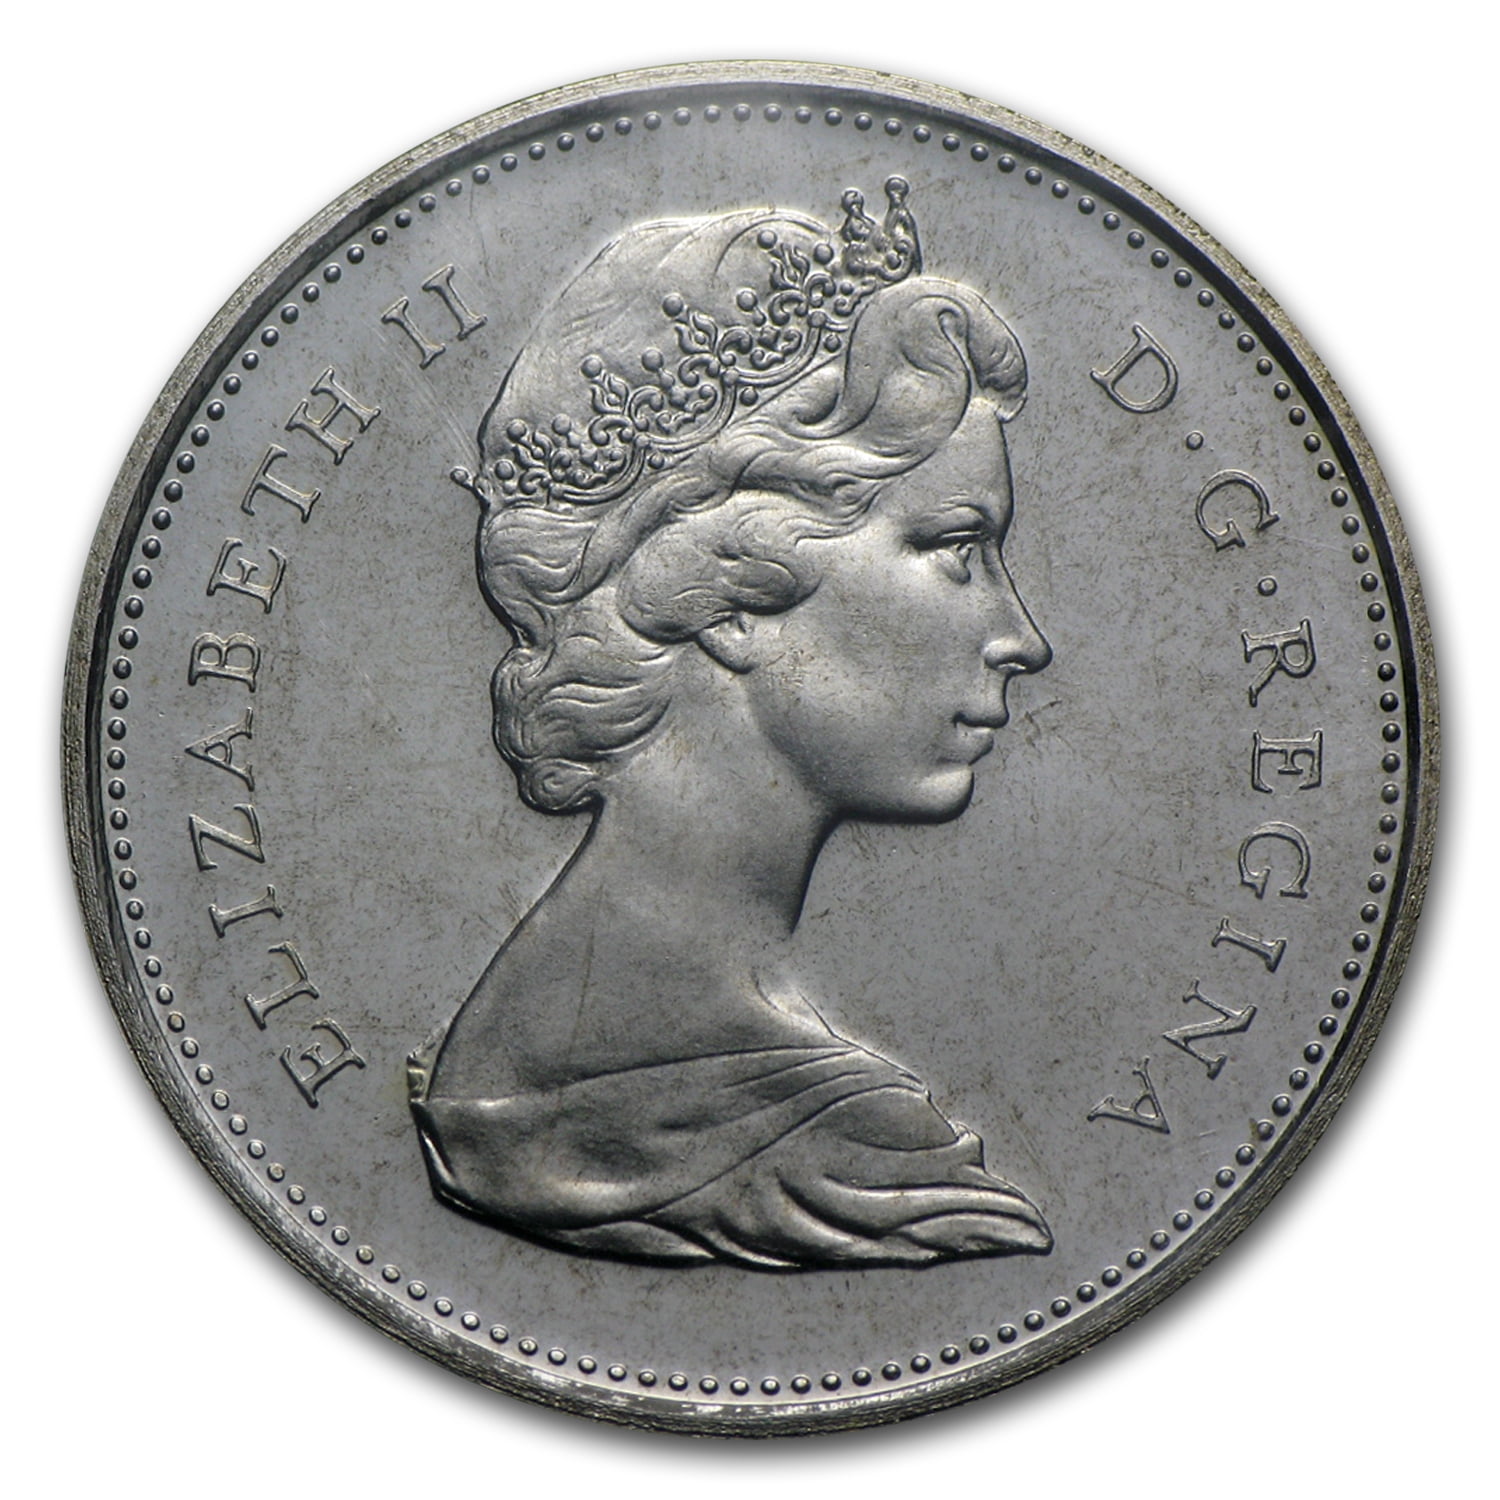 1965 Canada Silver Quarter Sealed in Cellophane 